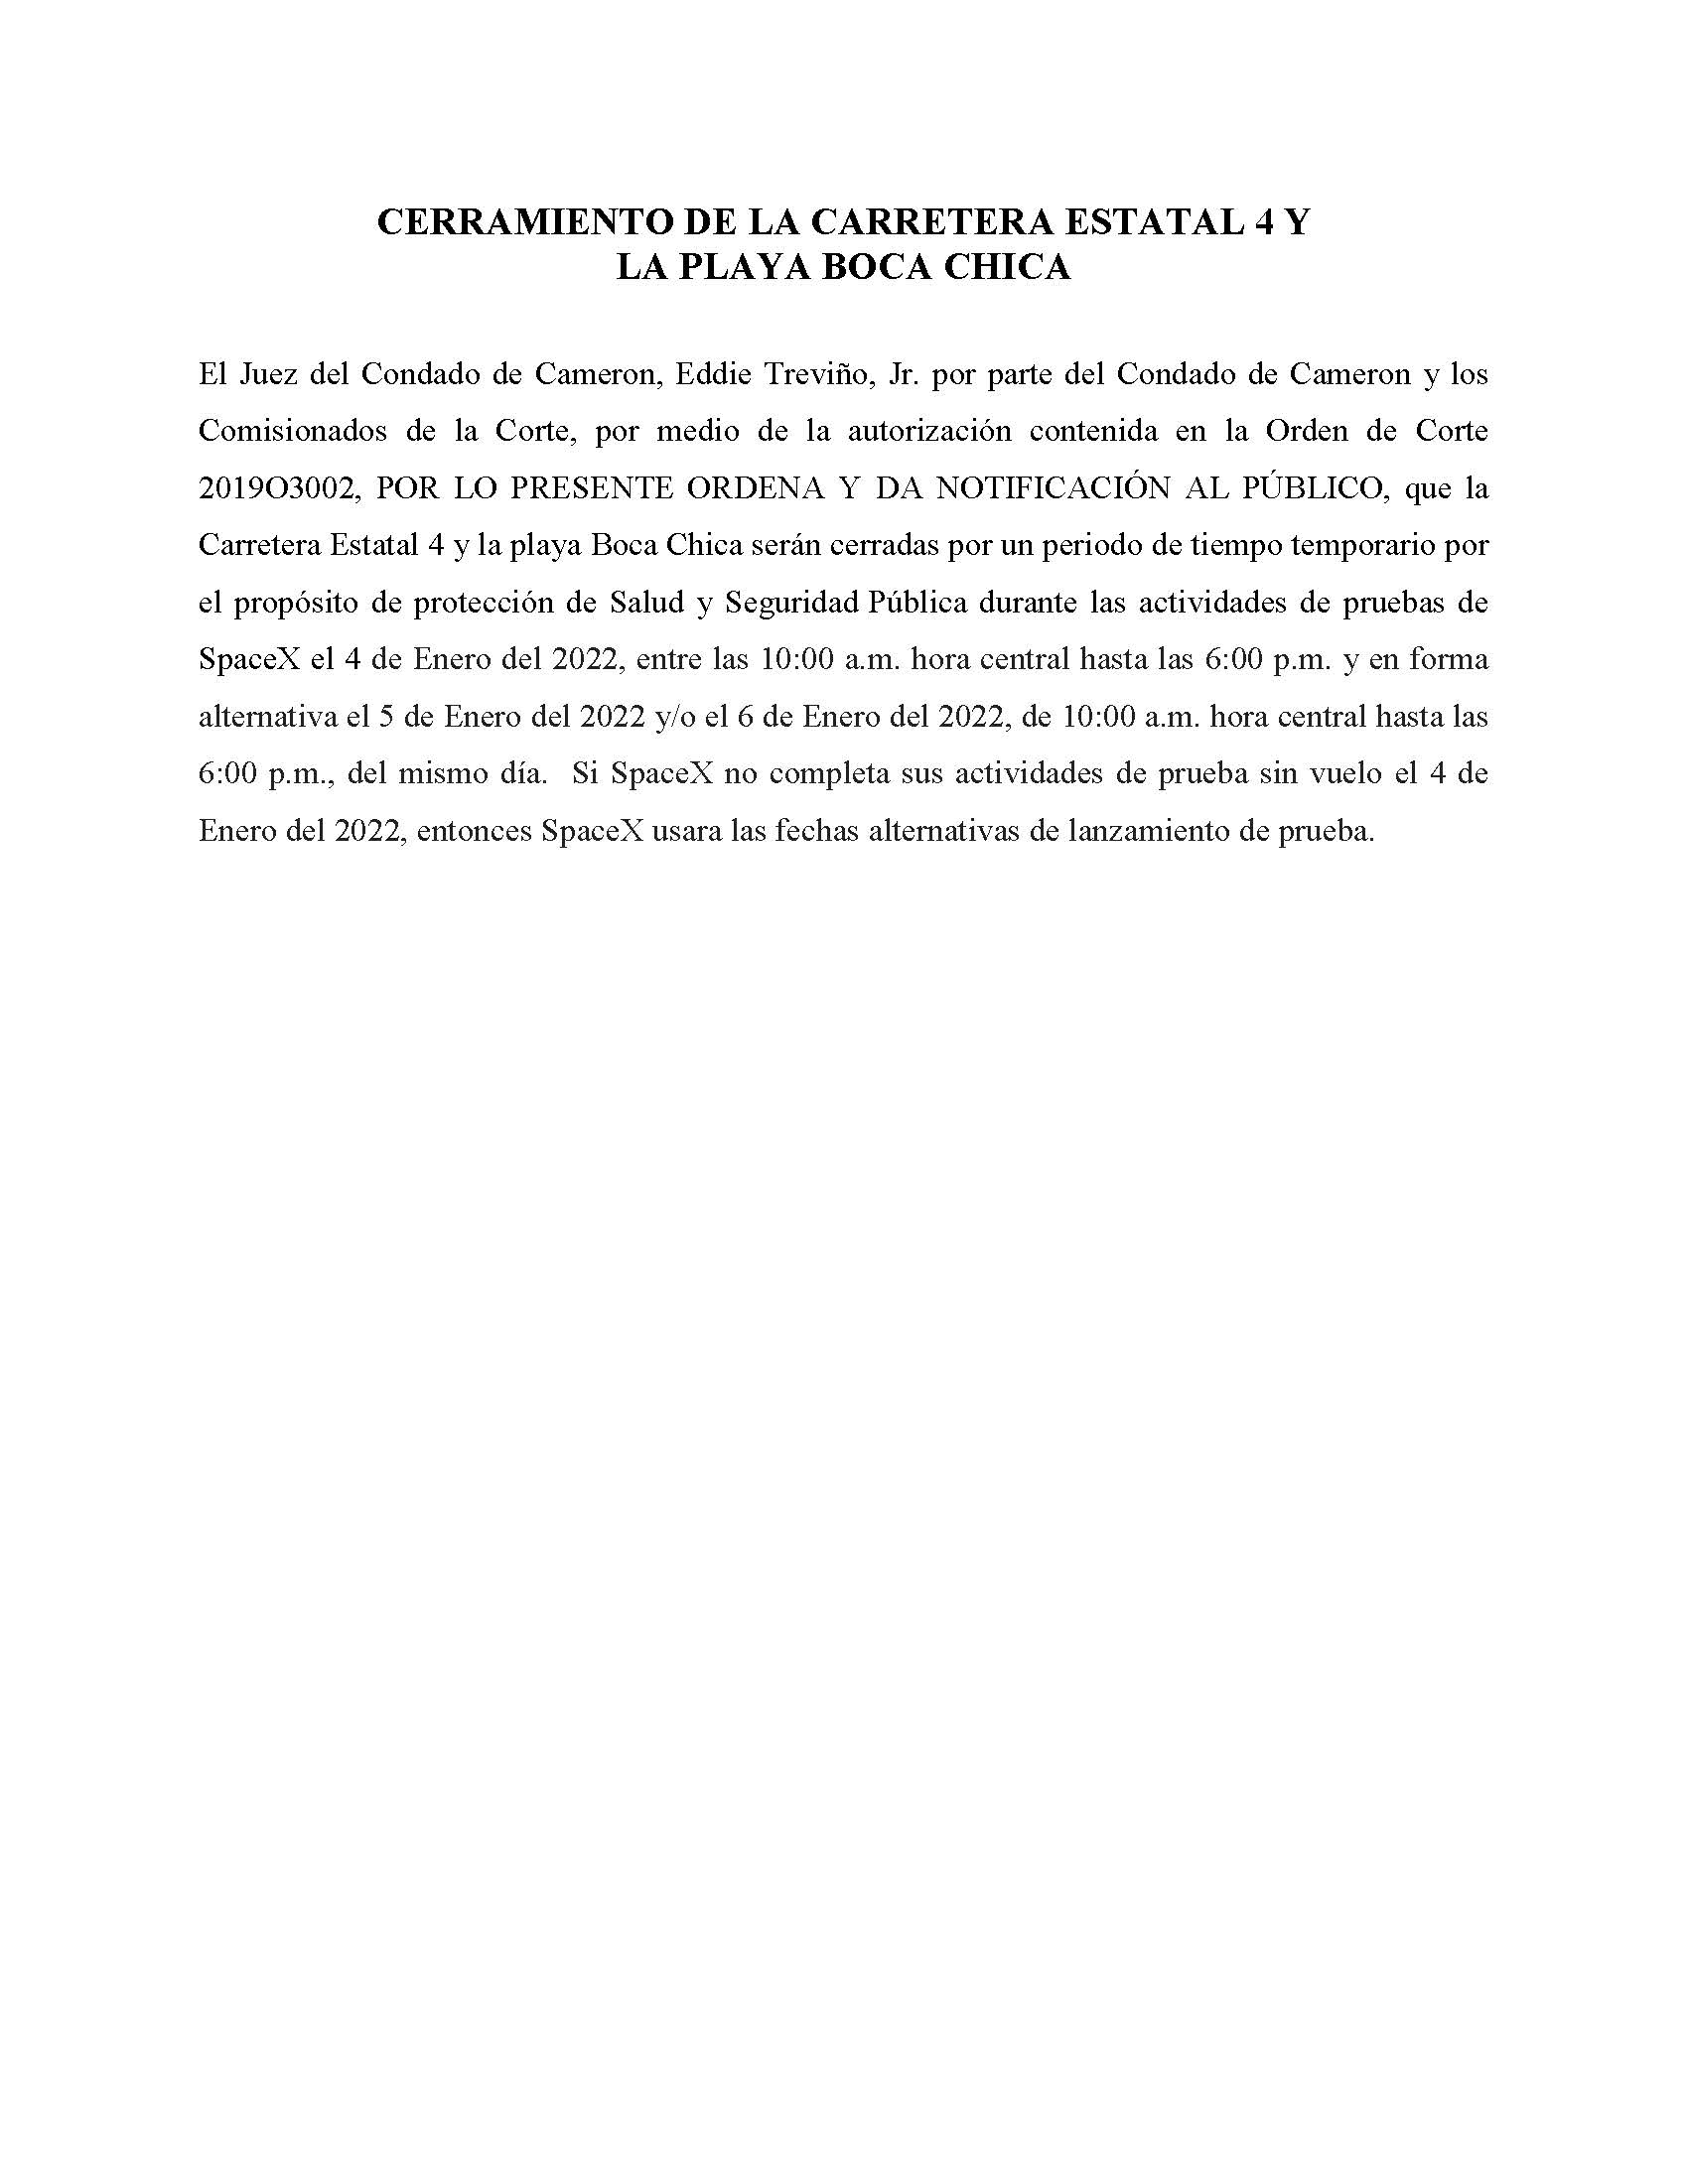 ORDER.CLOSURE OF HIGHWAY 4 Y LA PLAYA BOCA CHICA.SPANISH.01.04.2022 1